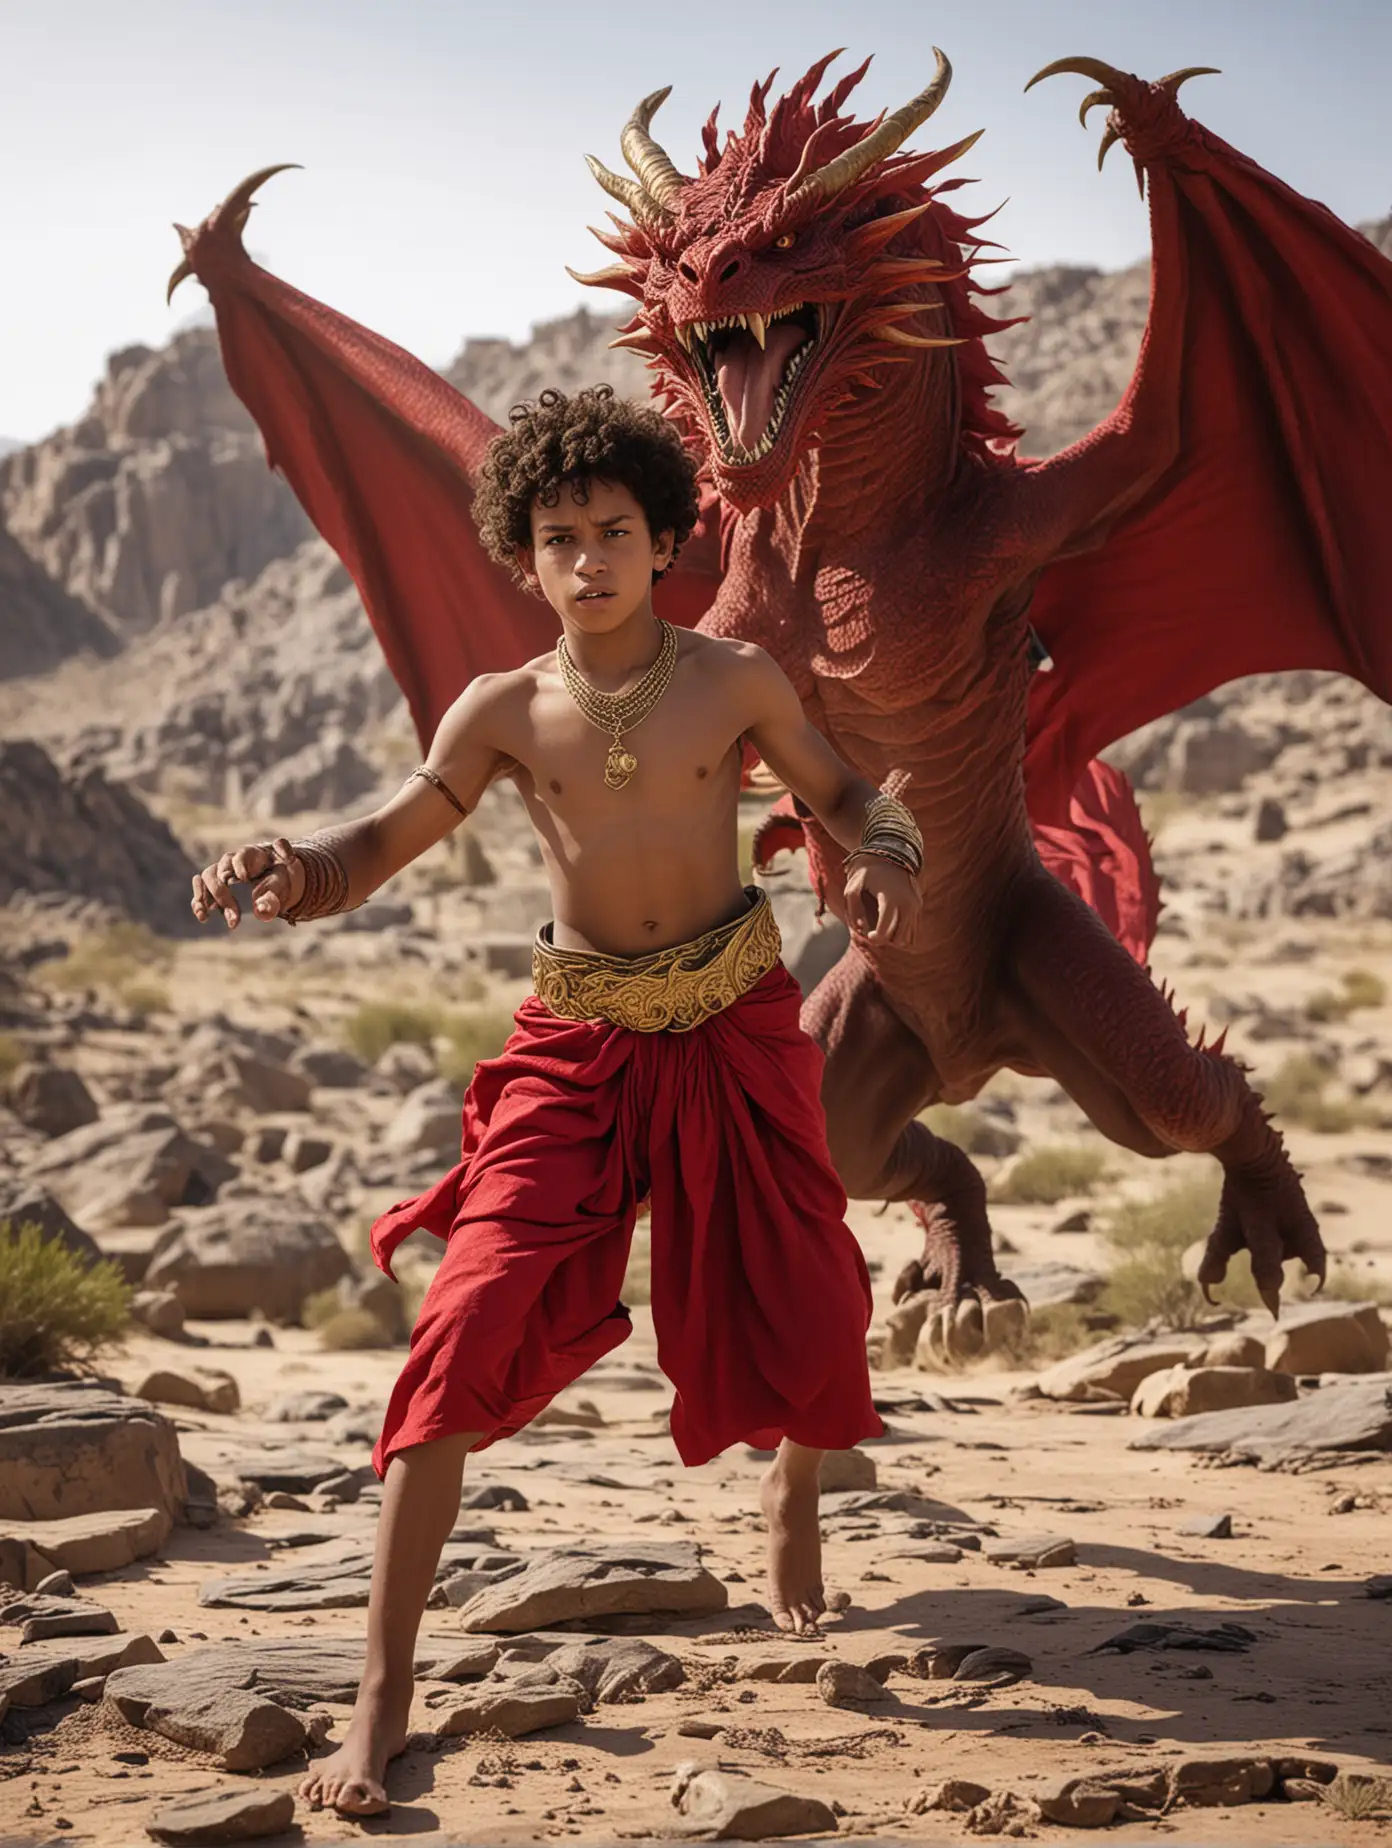 Brave-Teenage-Warrior-Battles-Giant-Red-Dragon-in-Desert-Landscape